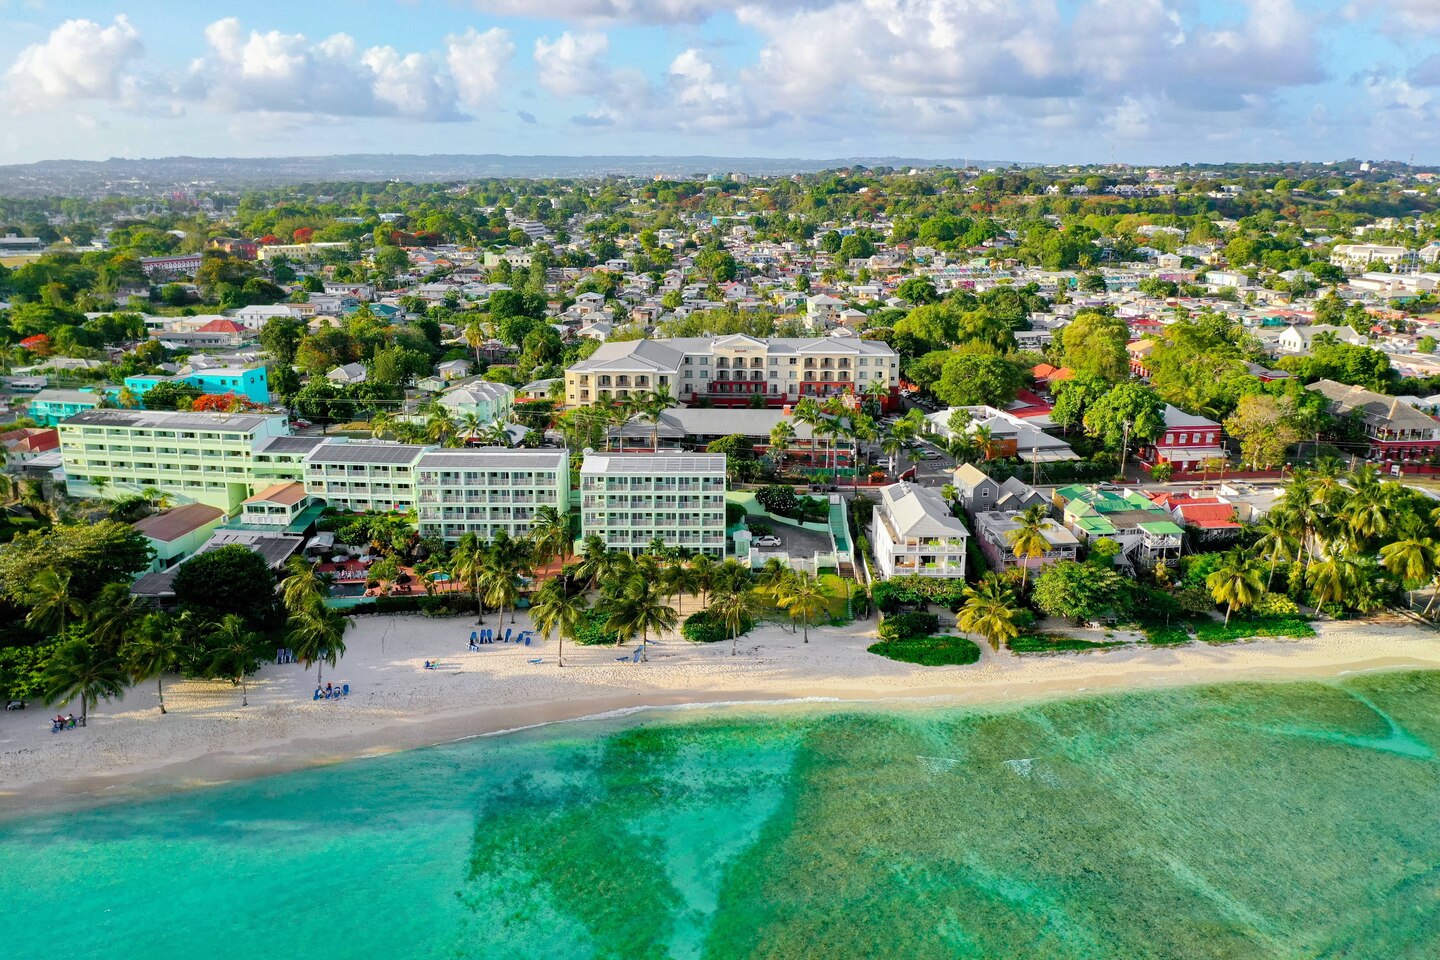 Courtyard Marriot - Bridgetown Barbados - Aerial